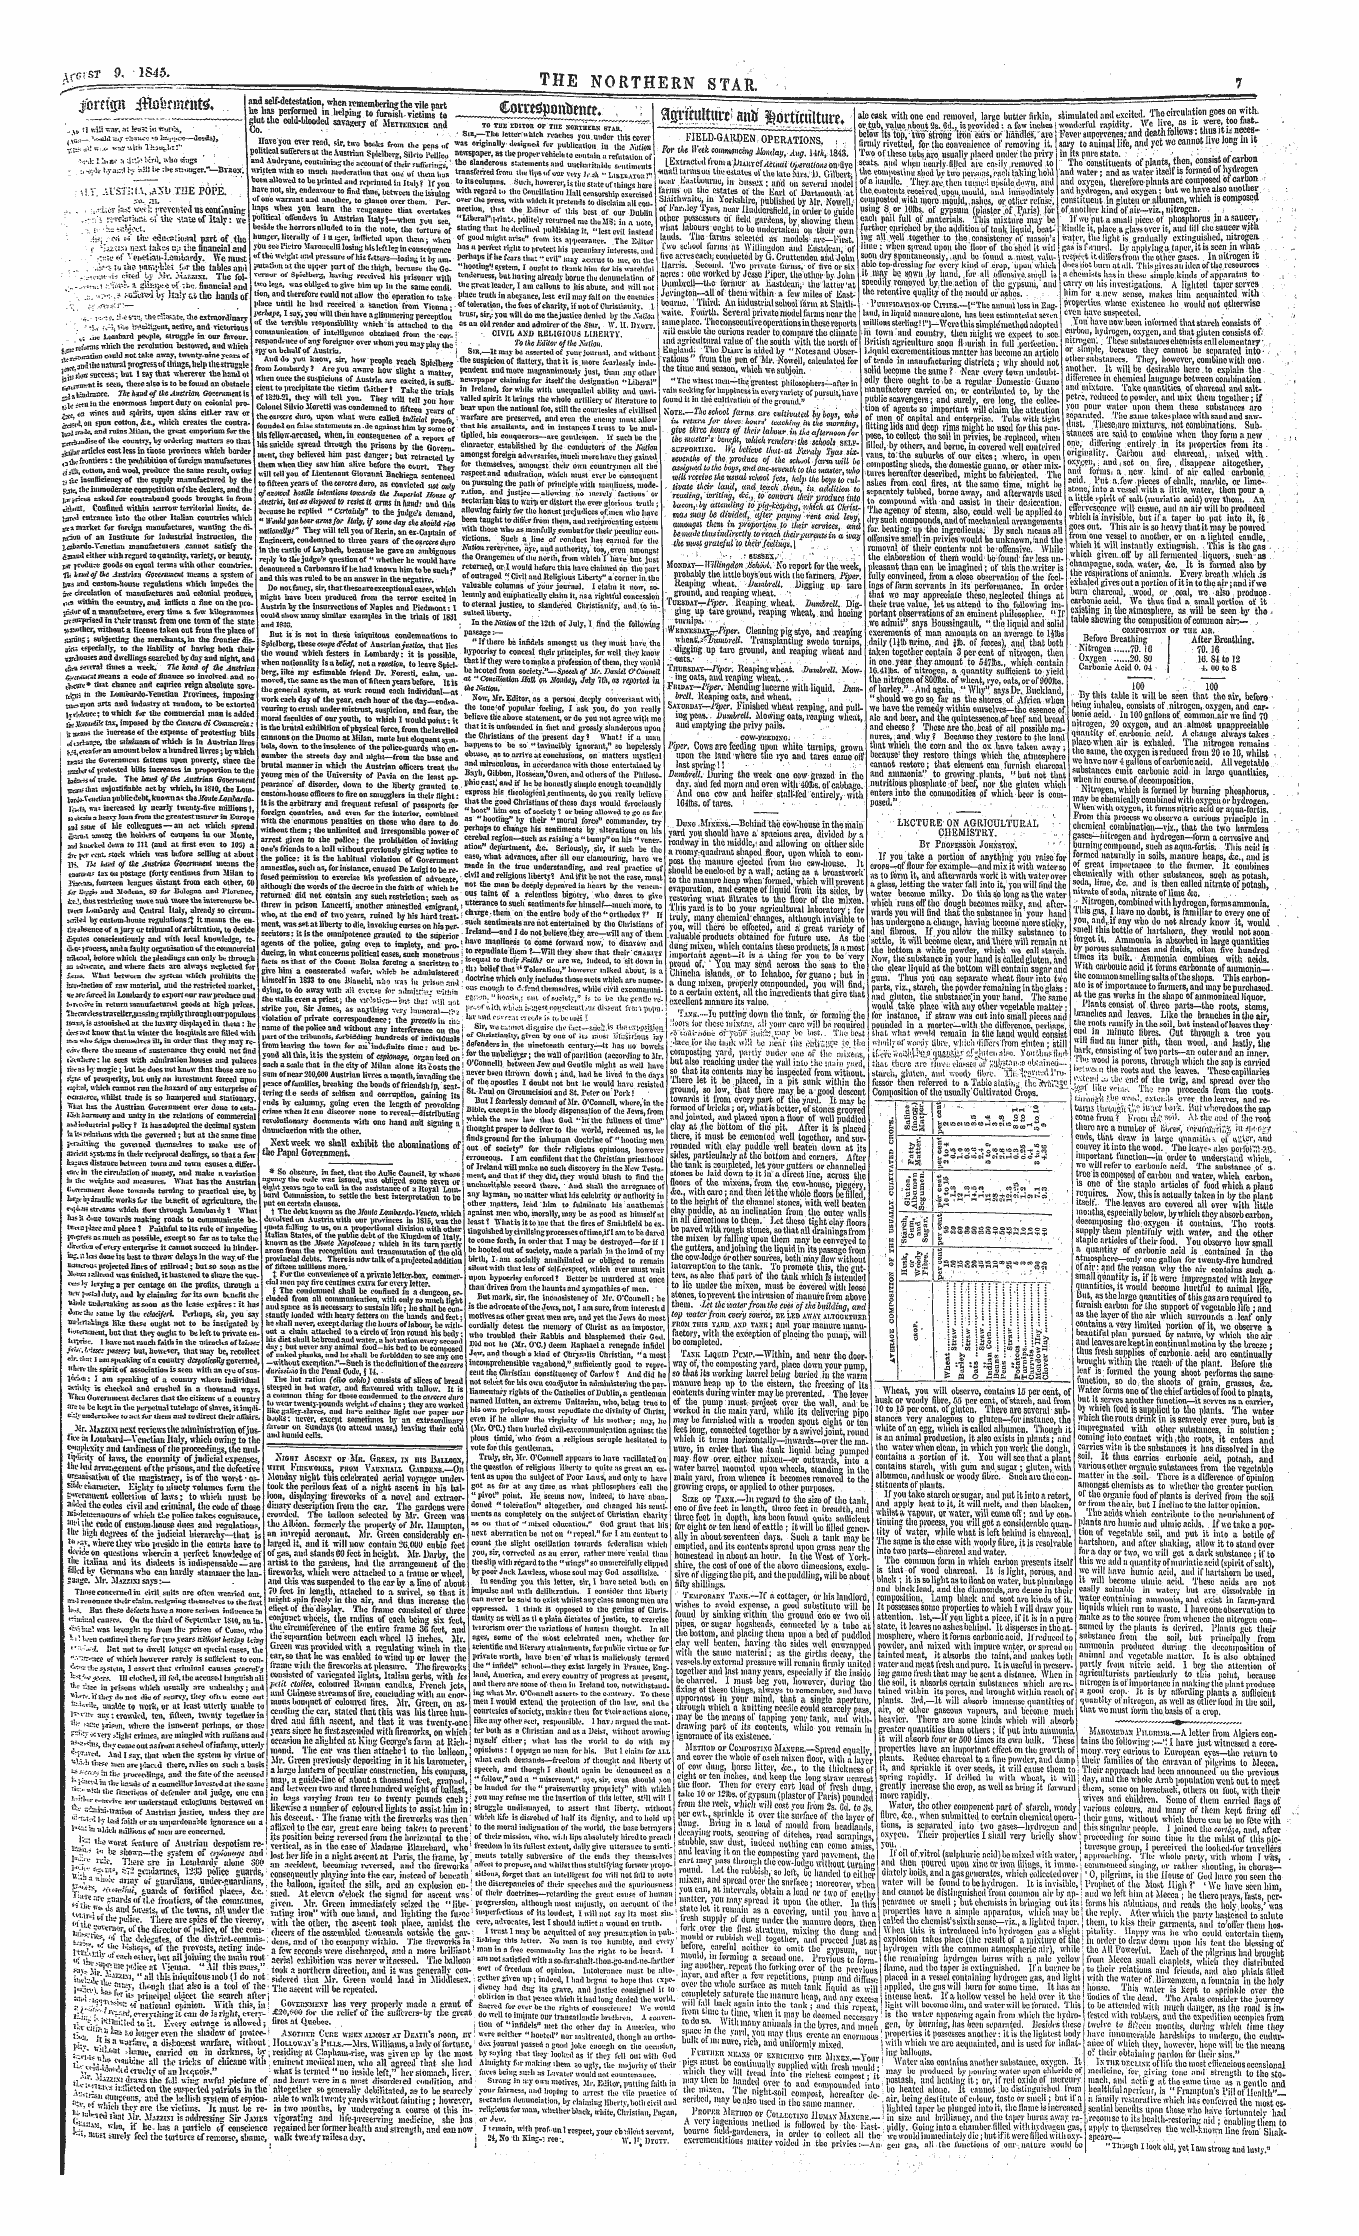 Northern Star (1837-1852): jS F Y, 1st edition - Comstyoti Btiur*: